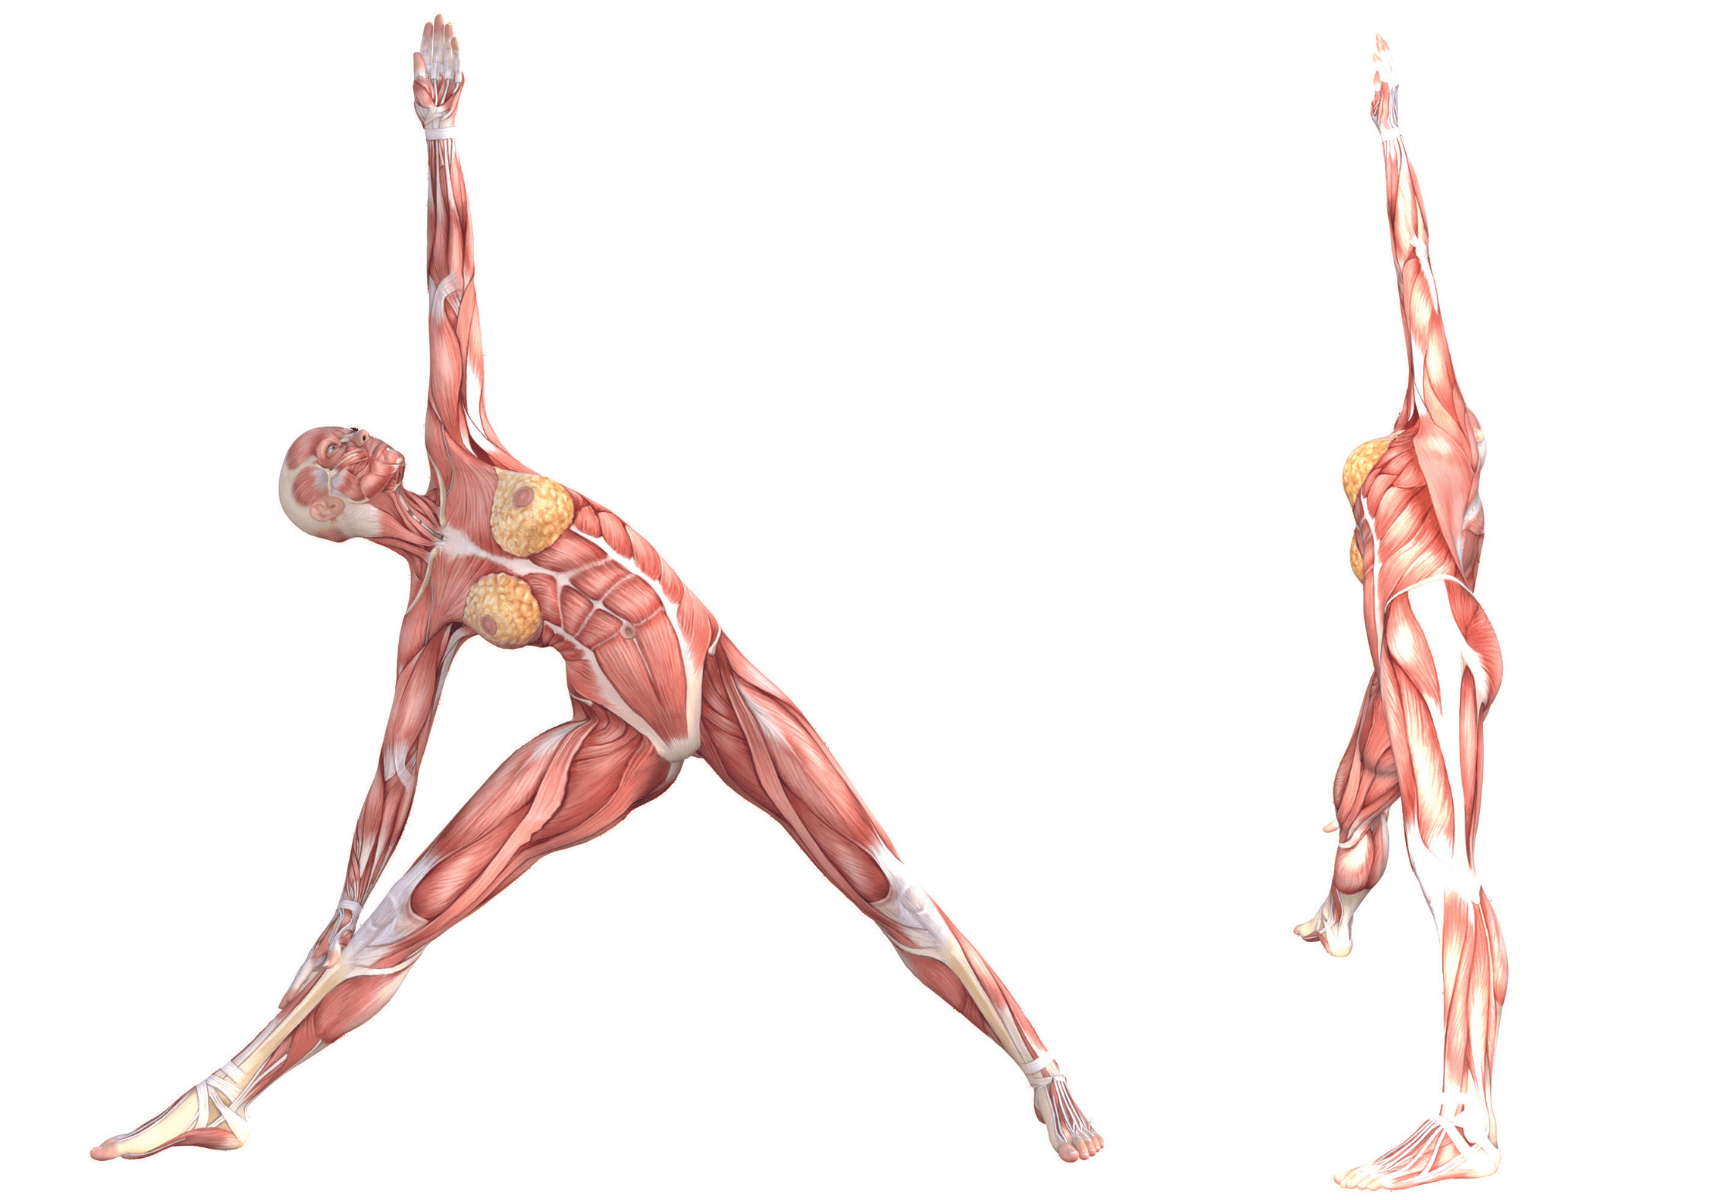 HD wallpaper: triangle pose, yoga asana, fitness, exercise, healthy, sport  | Wallpaper Flare